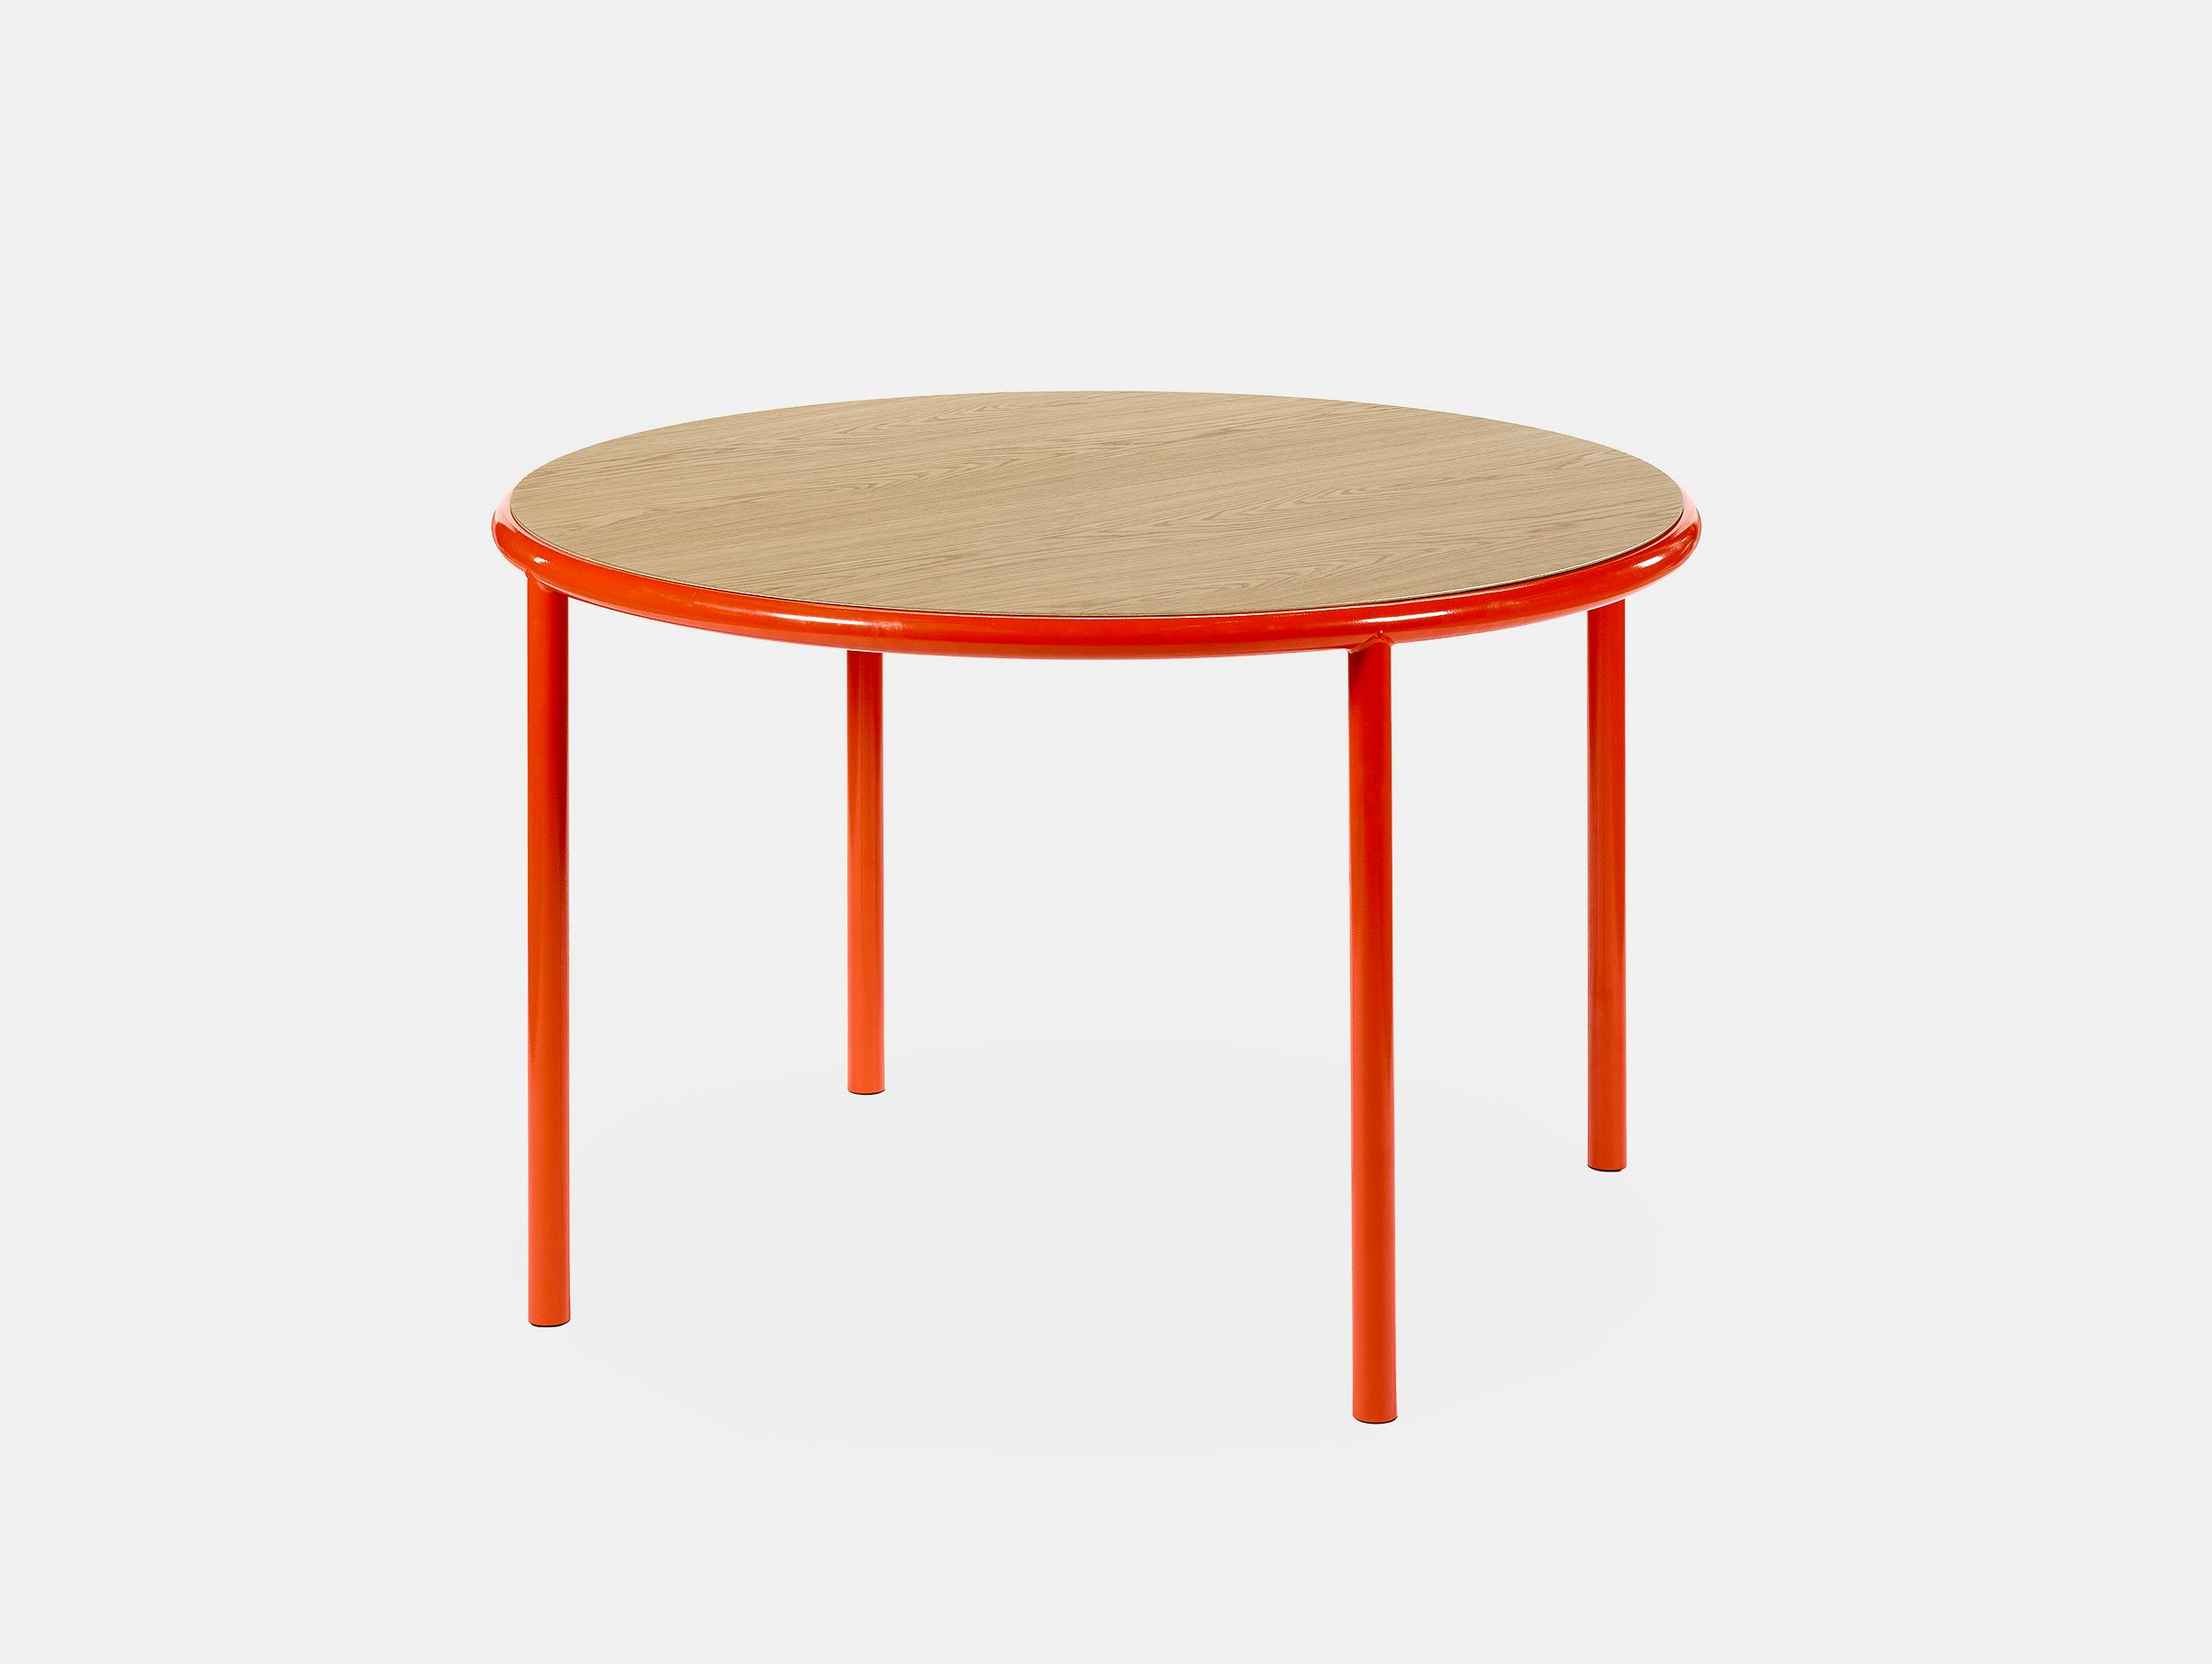 Muller van severen wooden table small round red oak